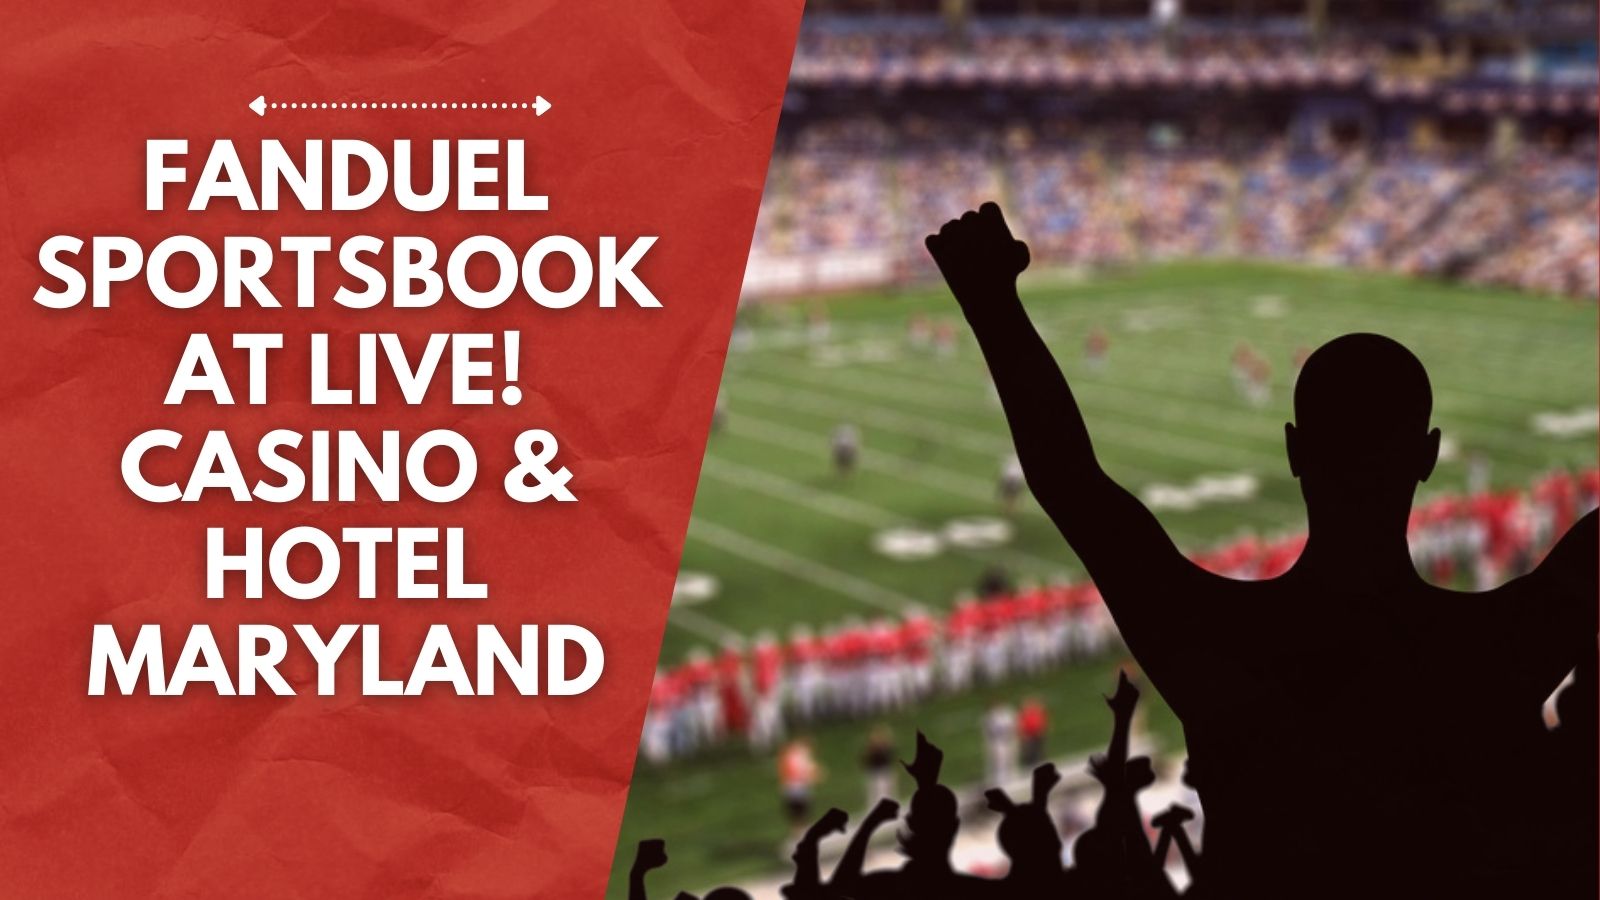 FanDuel Sportsbook at Live! Casino & Hotel Maryland - MarylandReporter.com